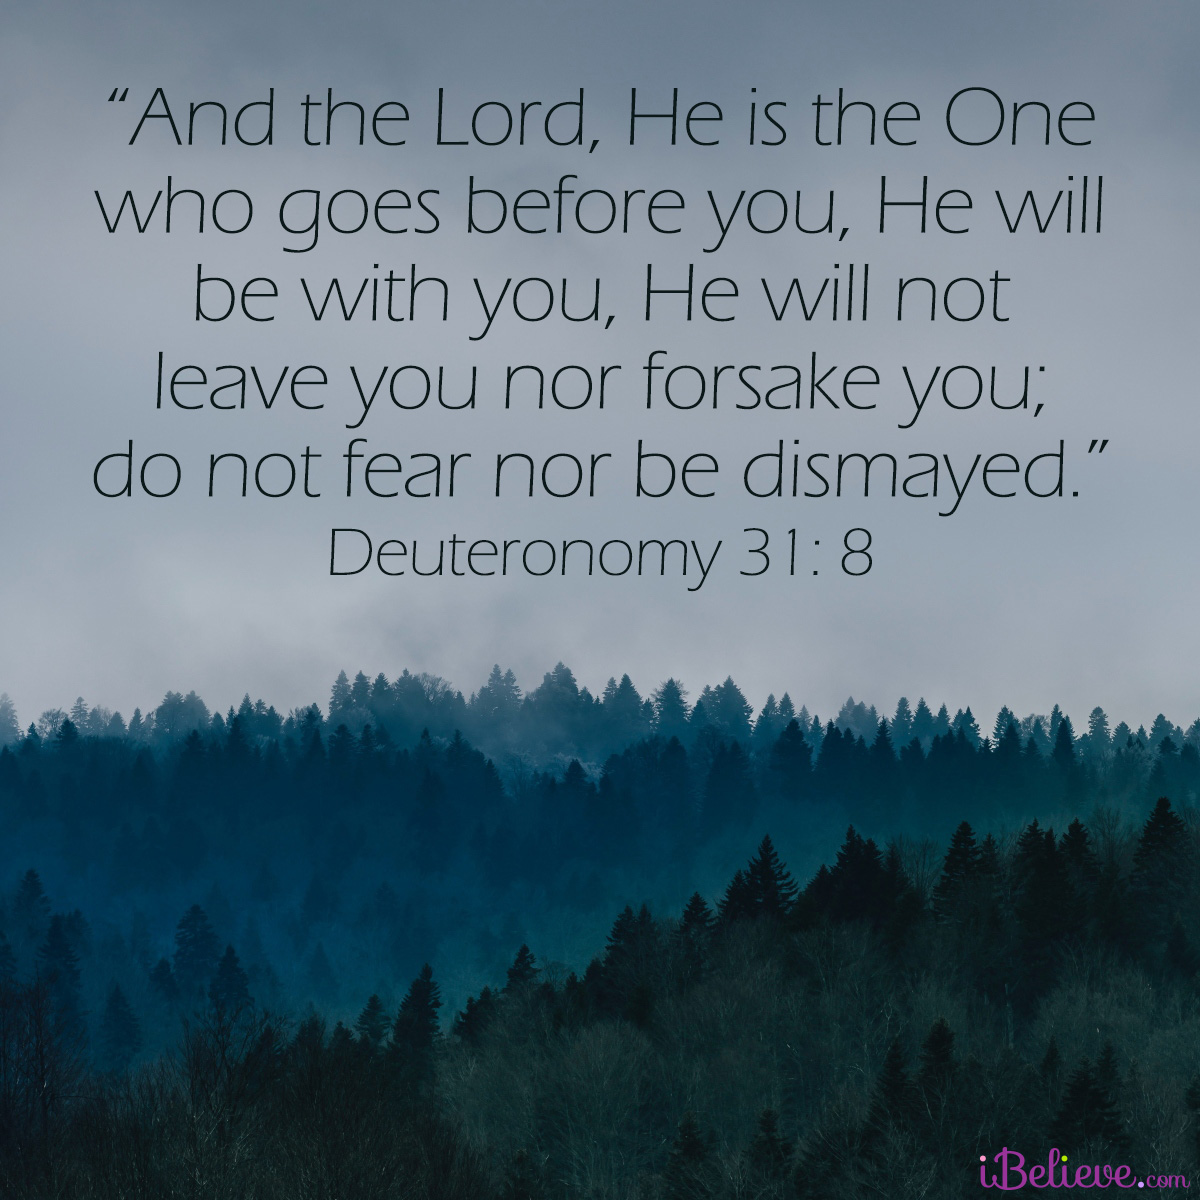 Deuteronomy 31:8, inspirational image